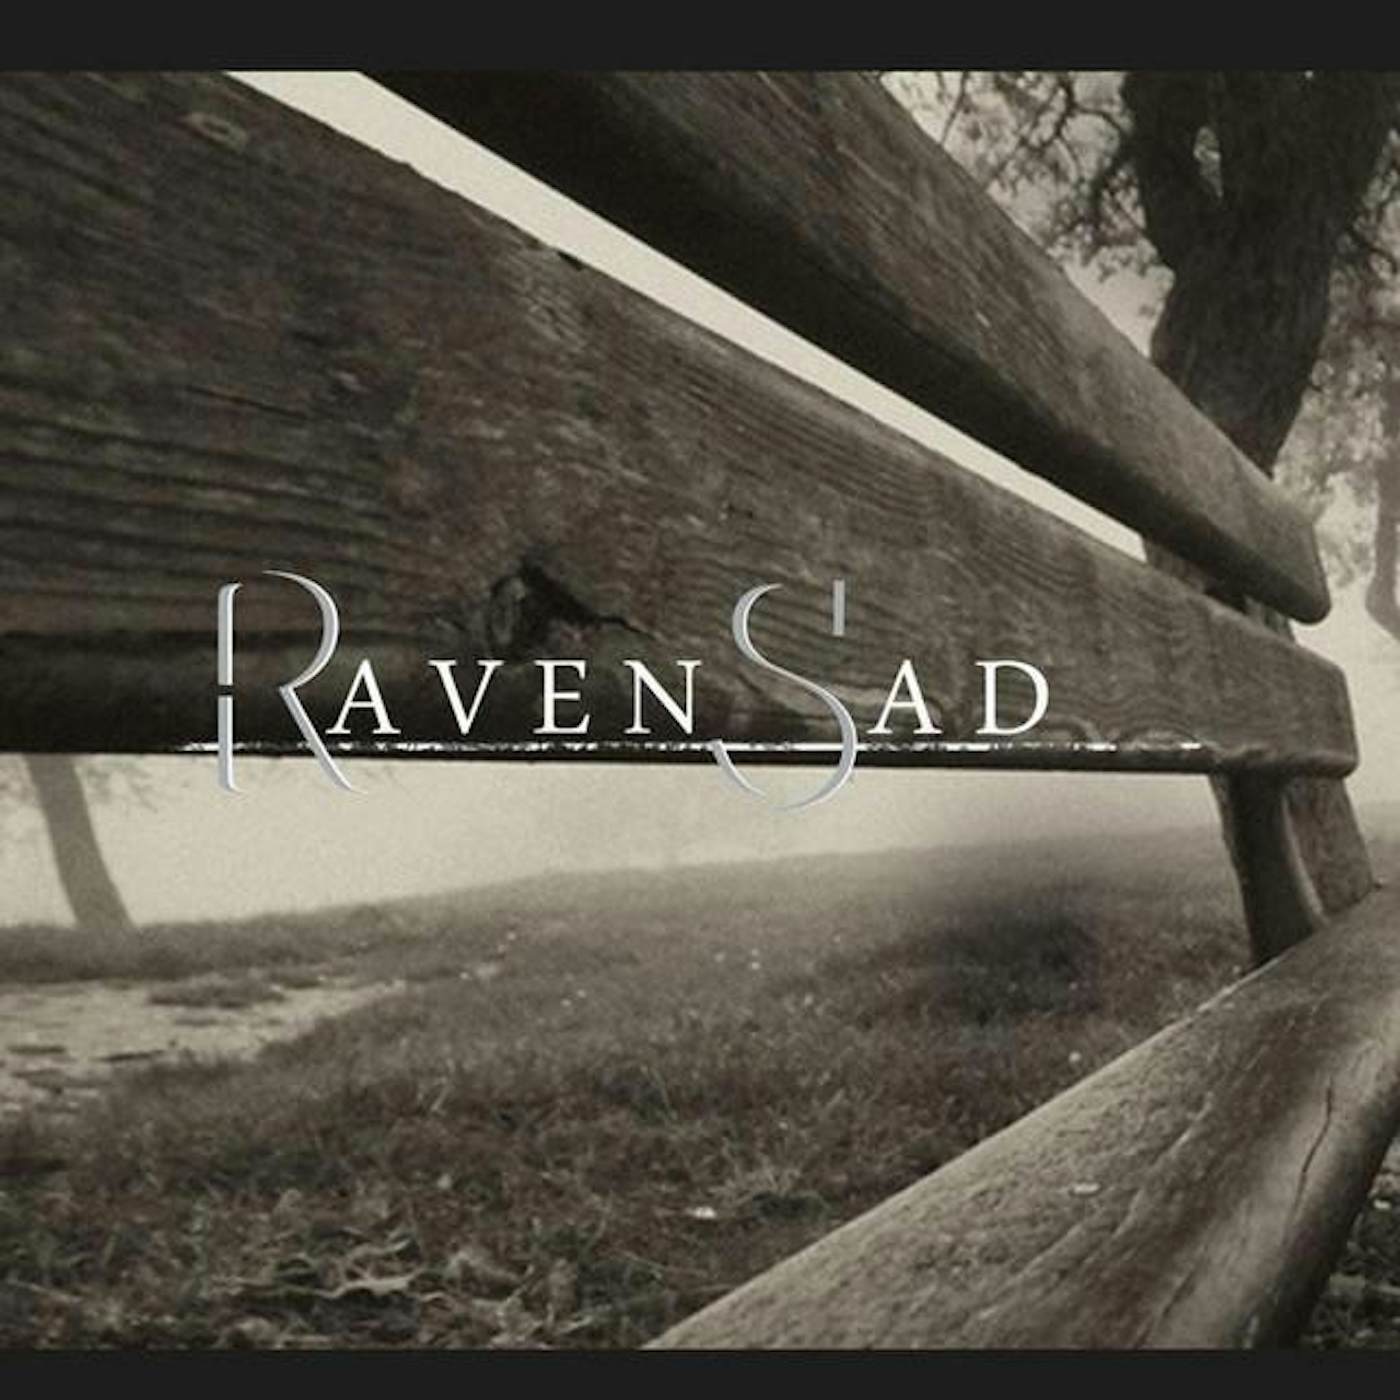 Raven Sad